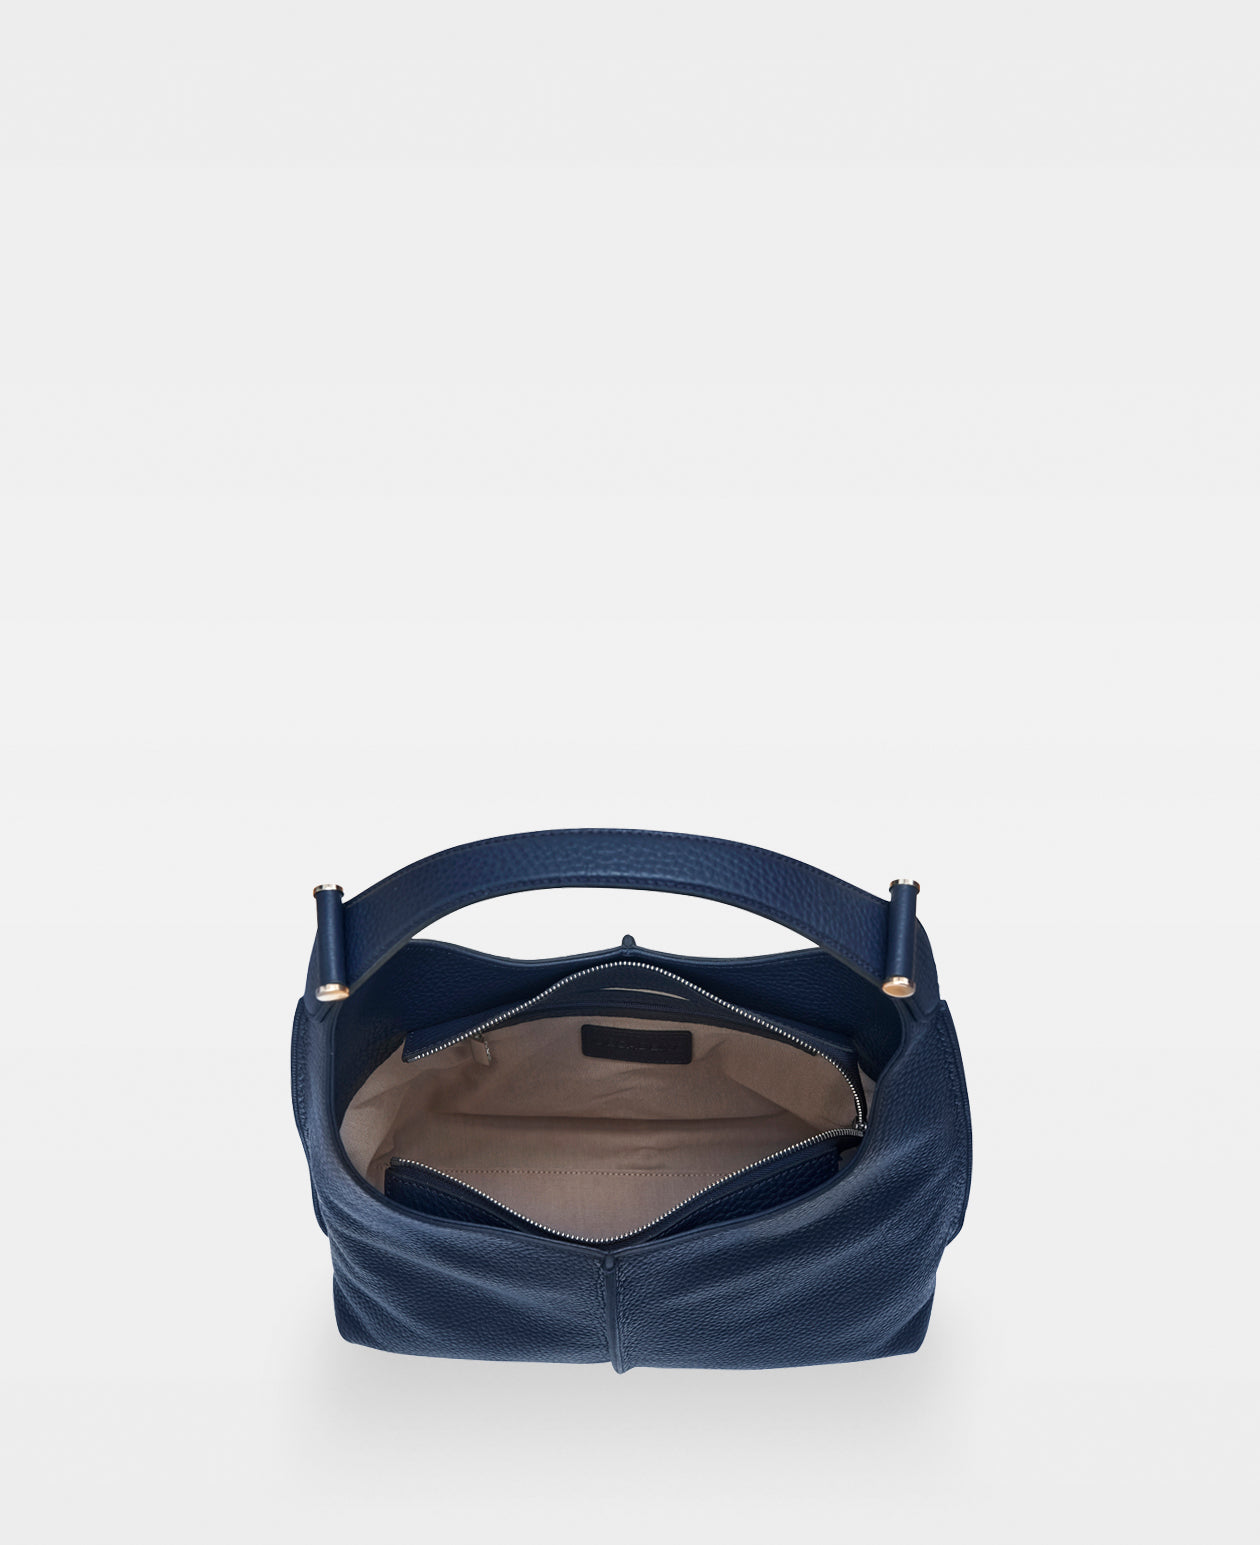 CAROL small shoulder bag - Navy